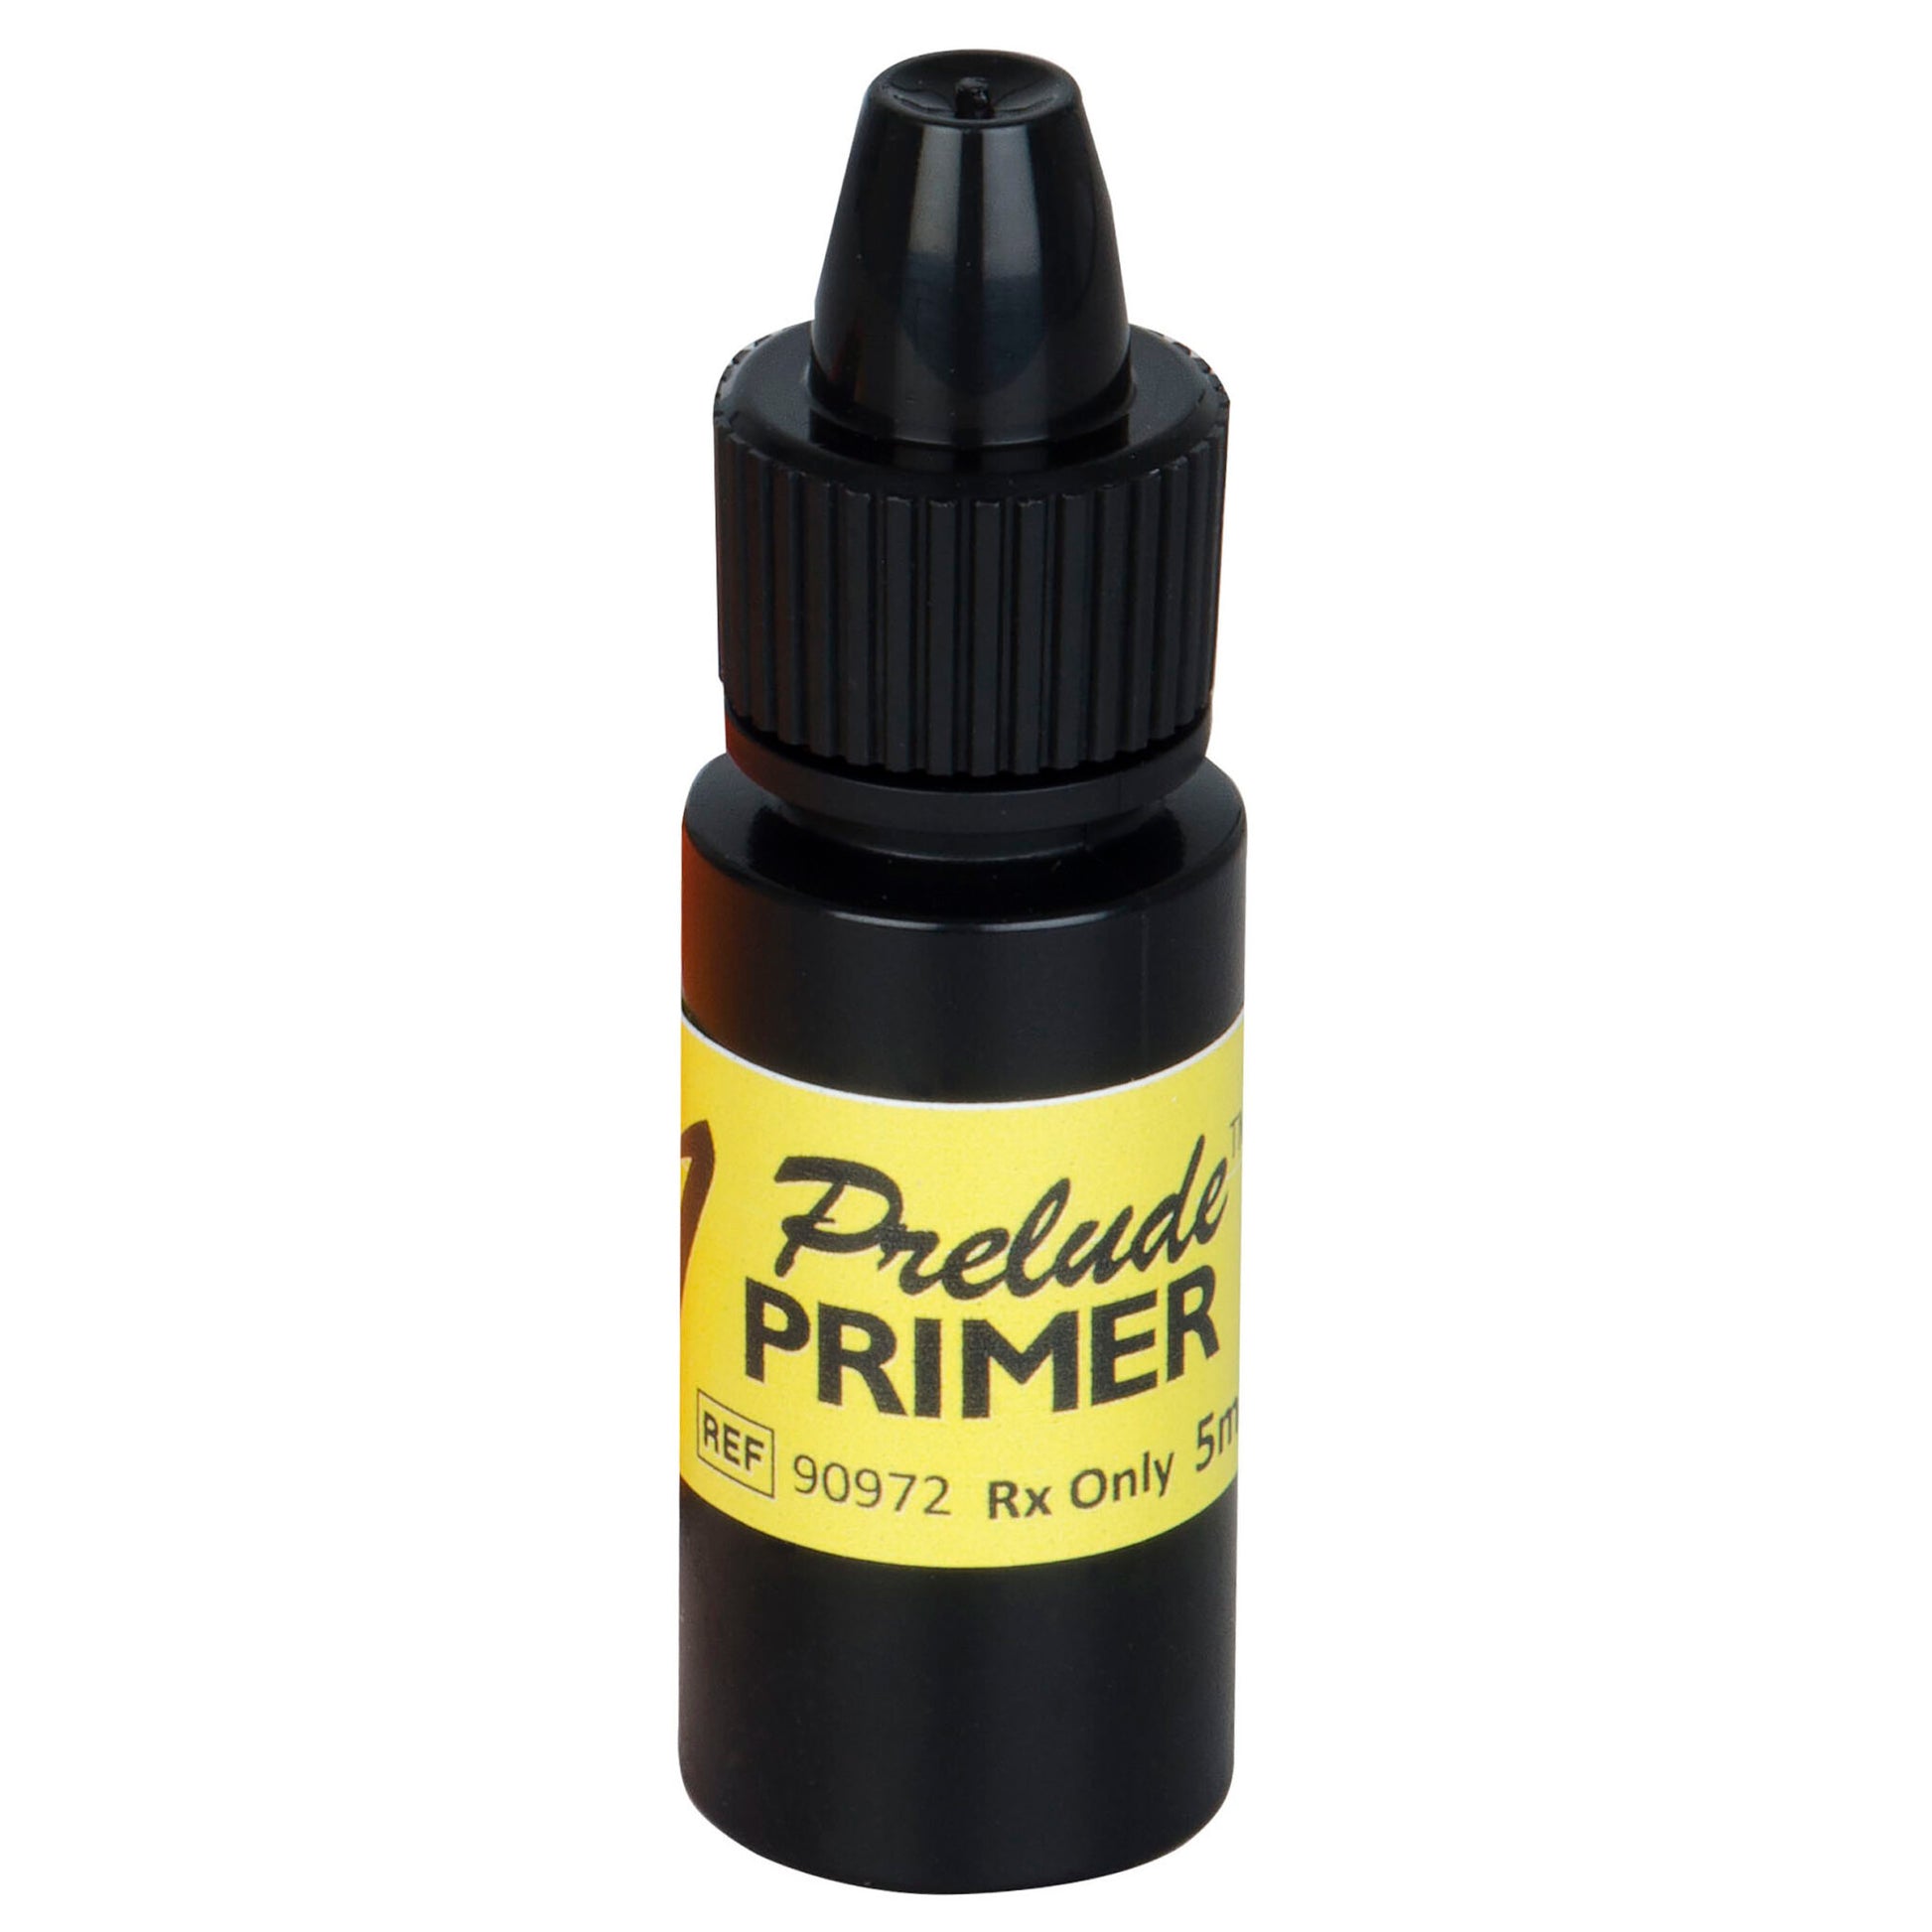 Prelude Primer (5 ml)